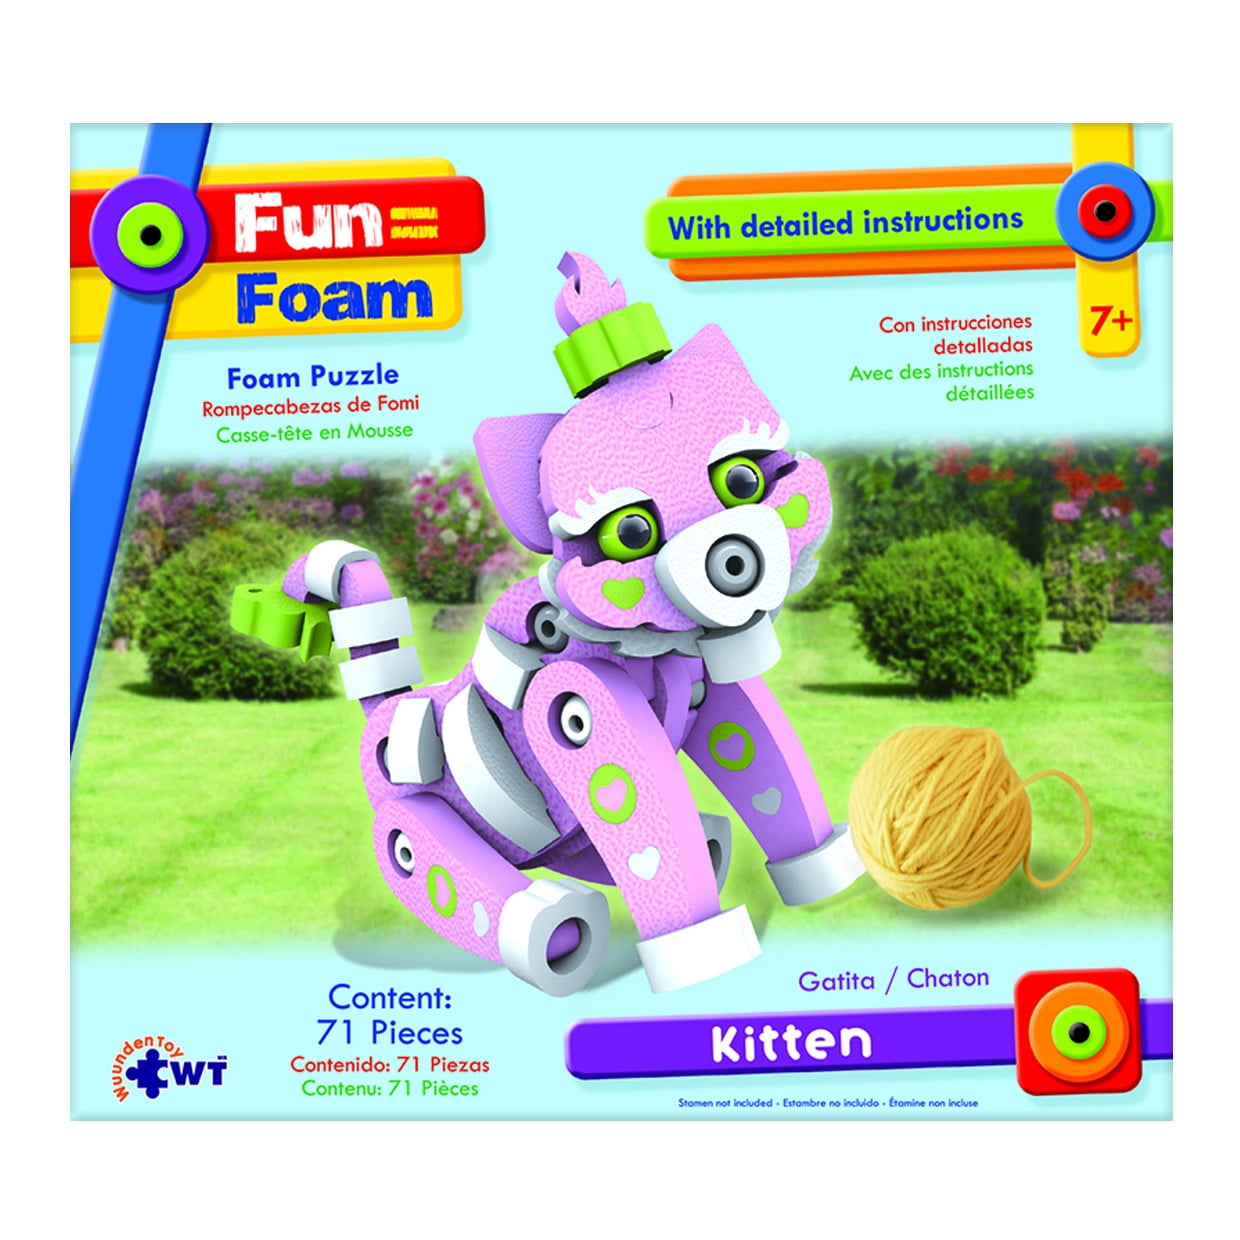 Kitten Heels 500 Piece Jigsaw Puzzle Toys & Games Brand New